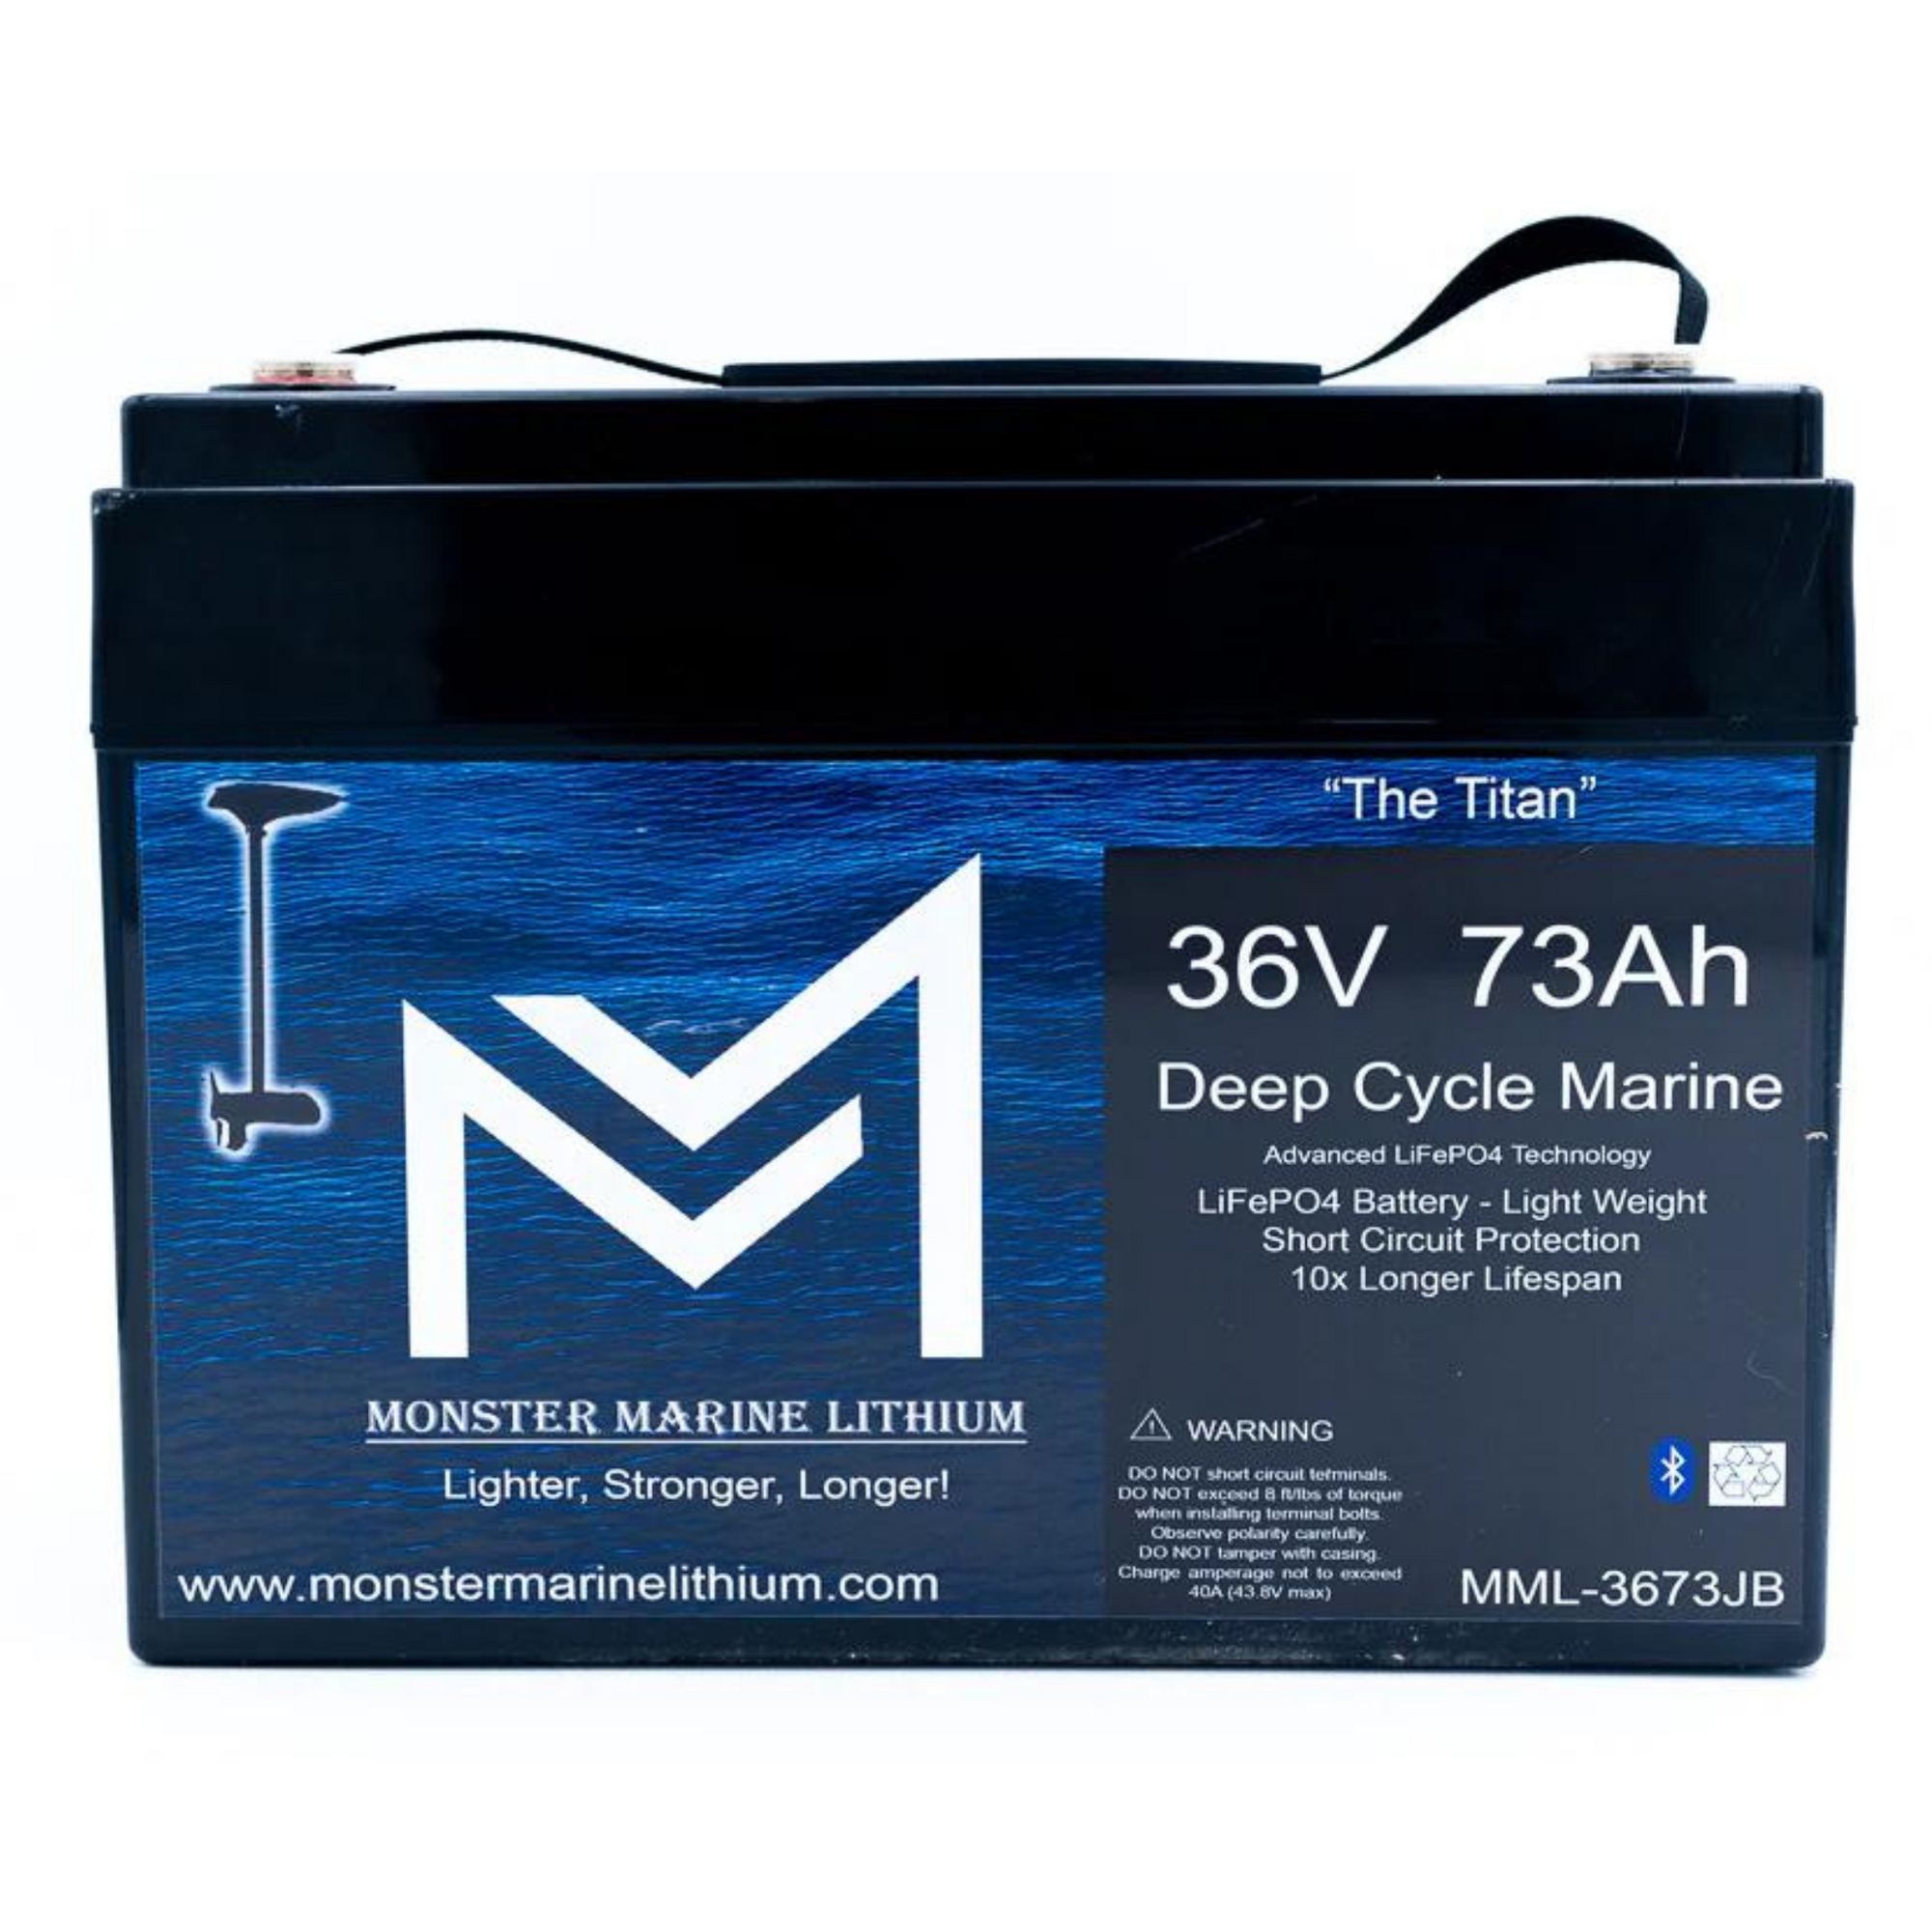 Monster Marine Lithium 36V 73Ah Lithium "Titan" Trolling Battery (Bluetooth)